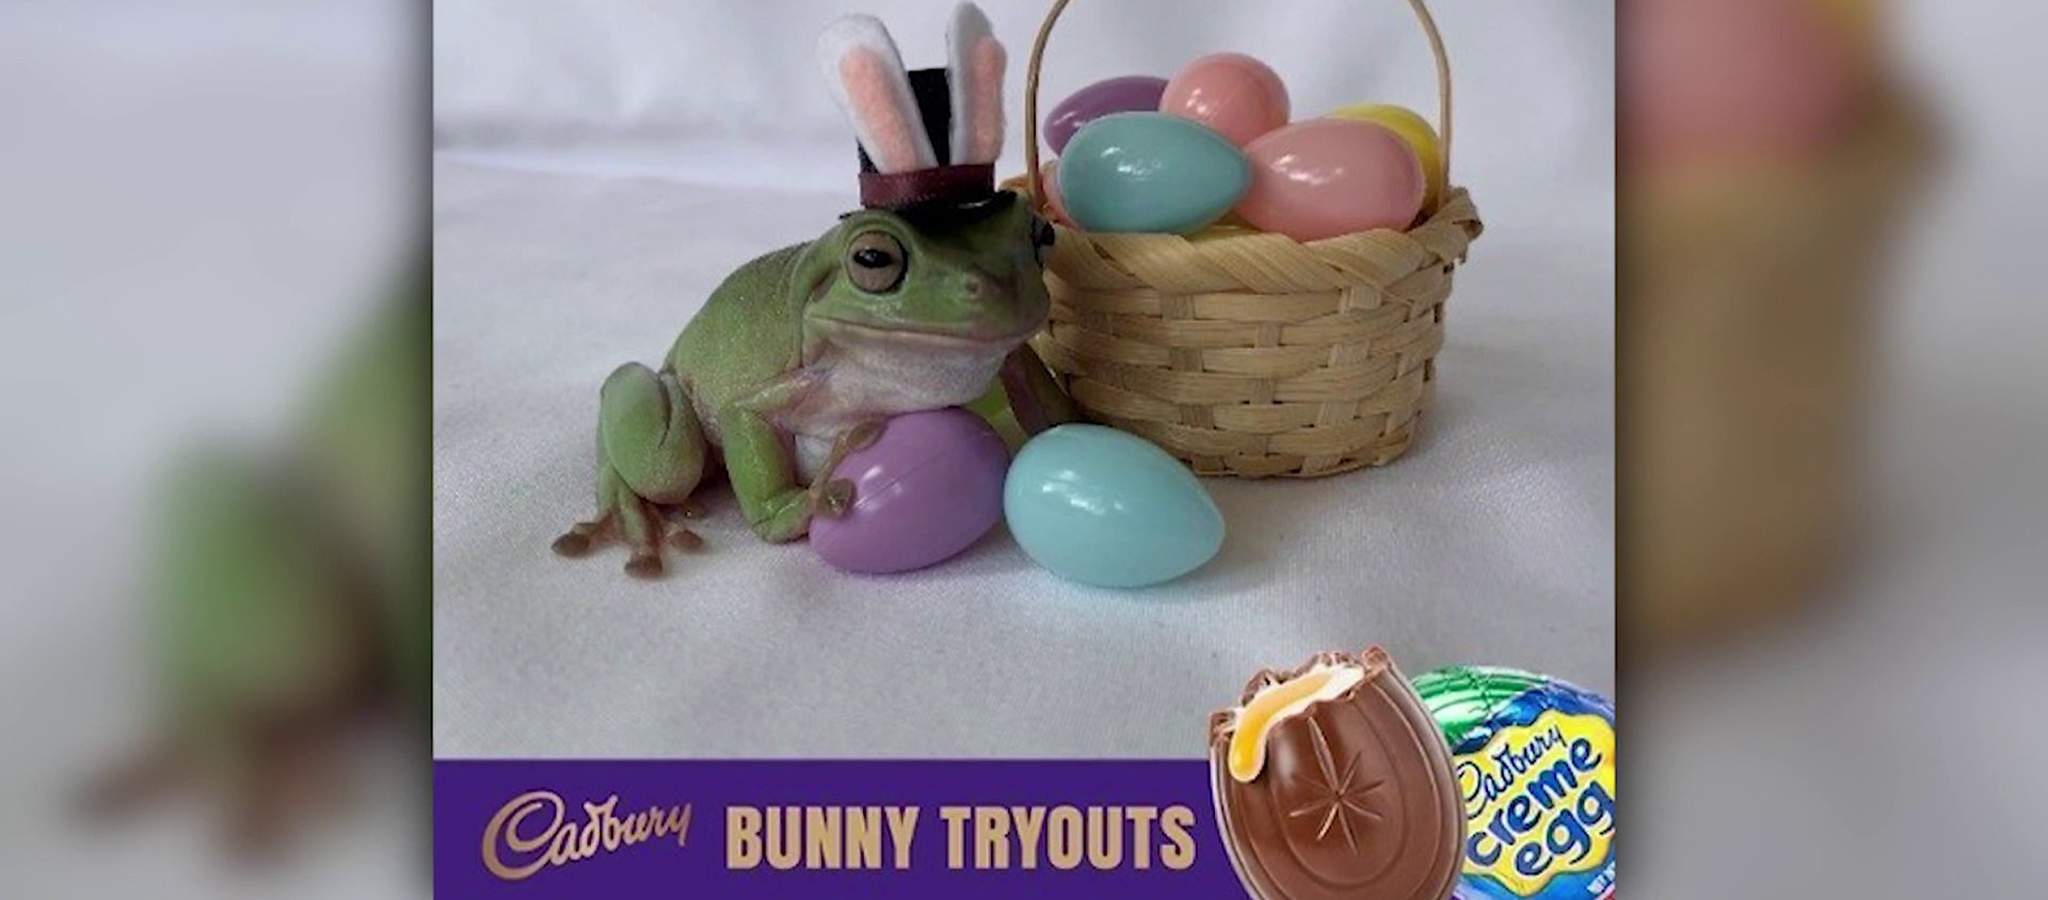 Congratulations: Orlando’s Betty the Frog named 2021 Cadbury Bunny